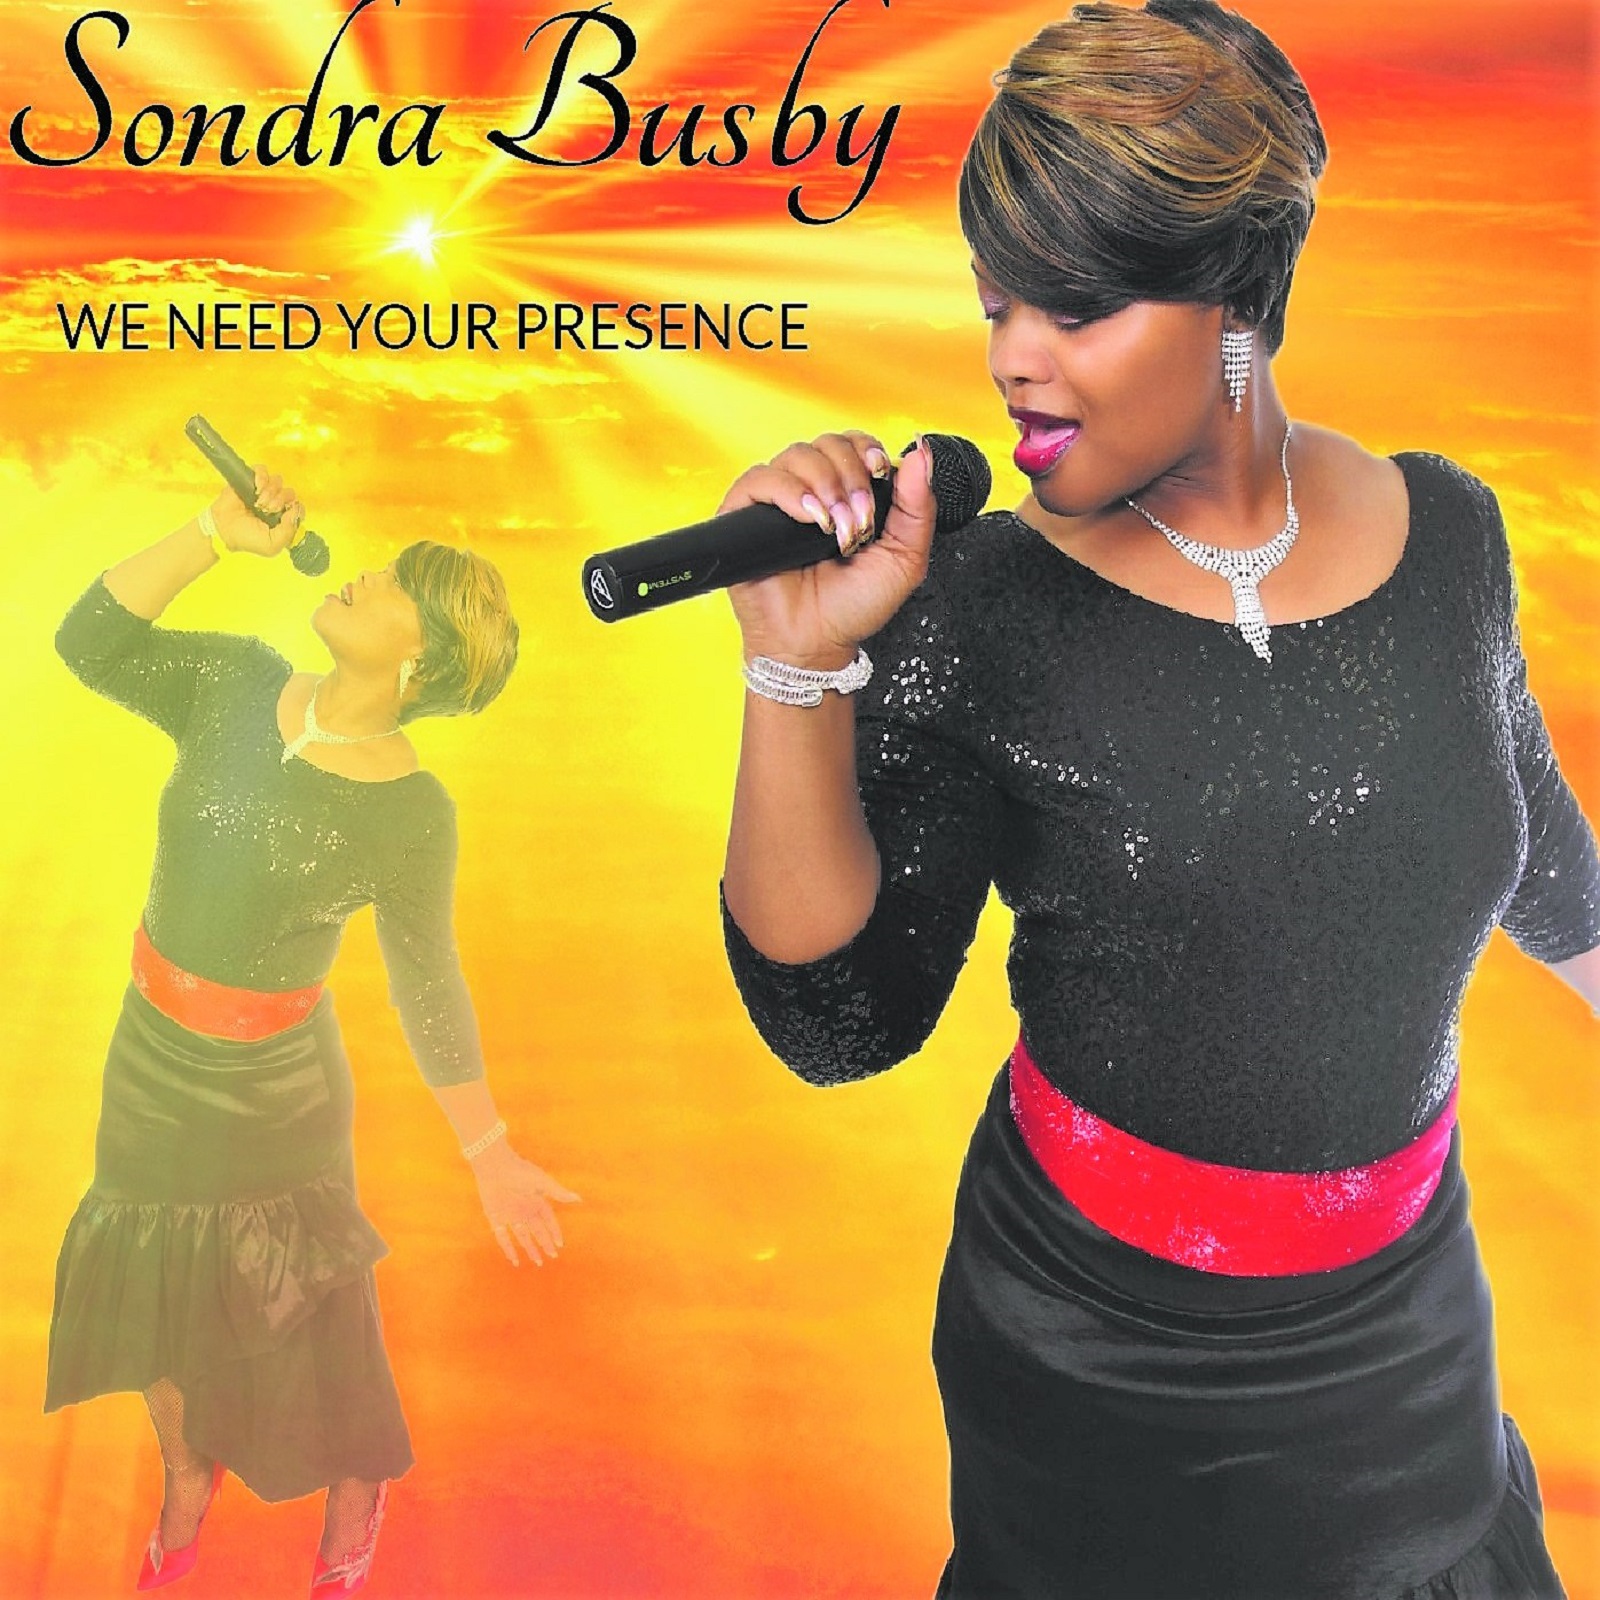 Sondra Busby